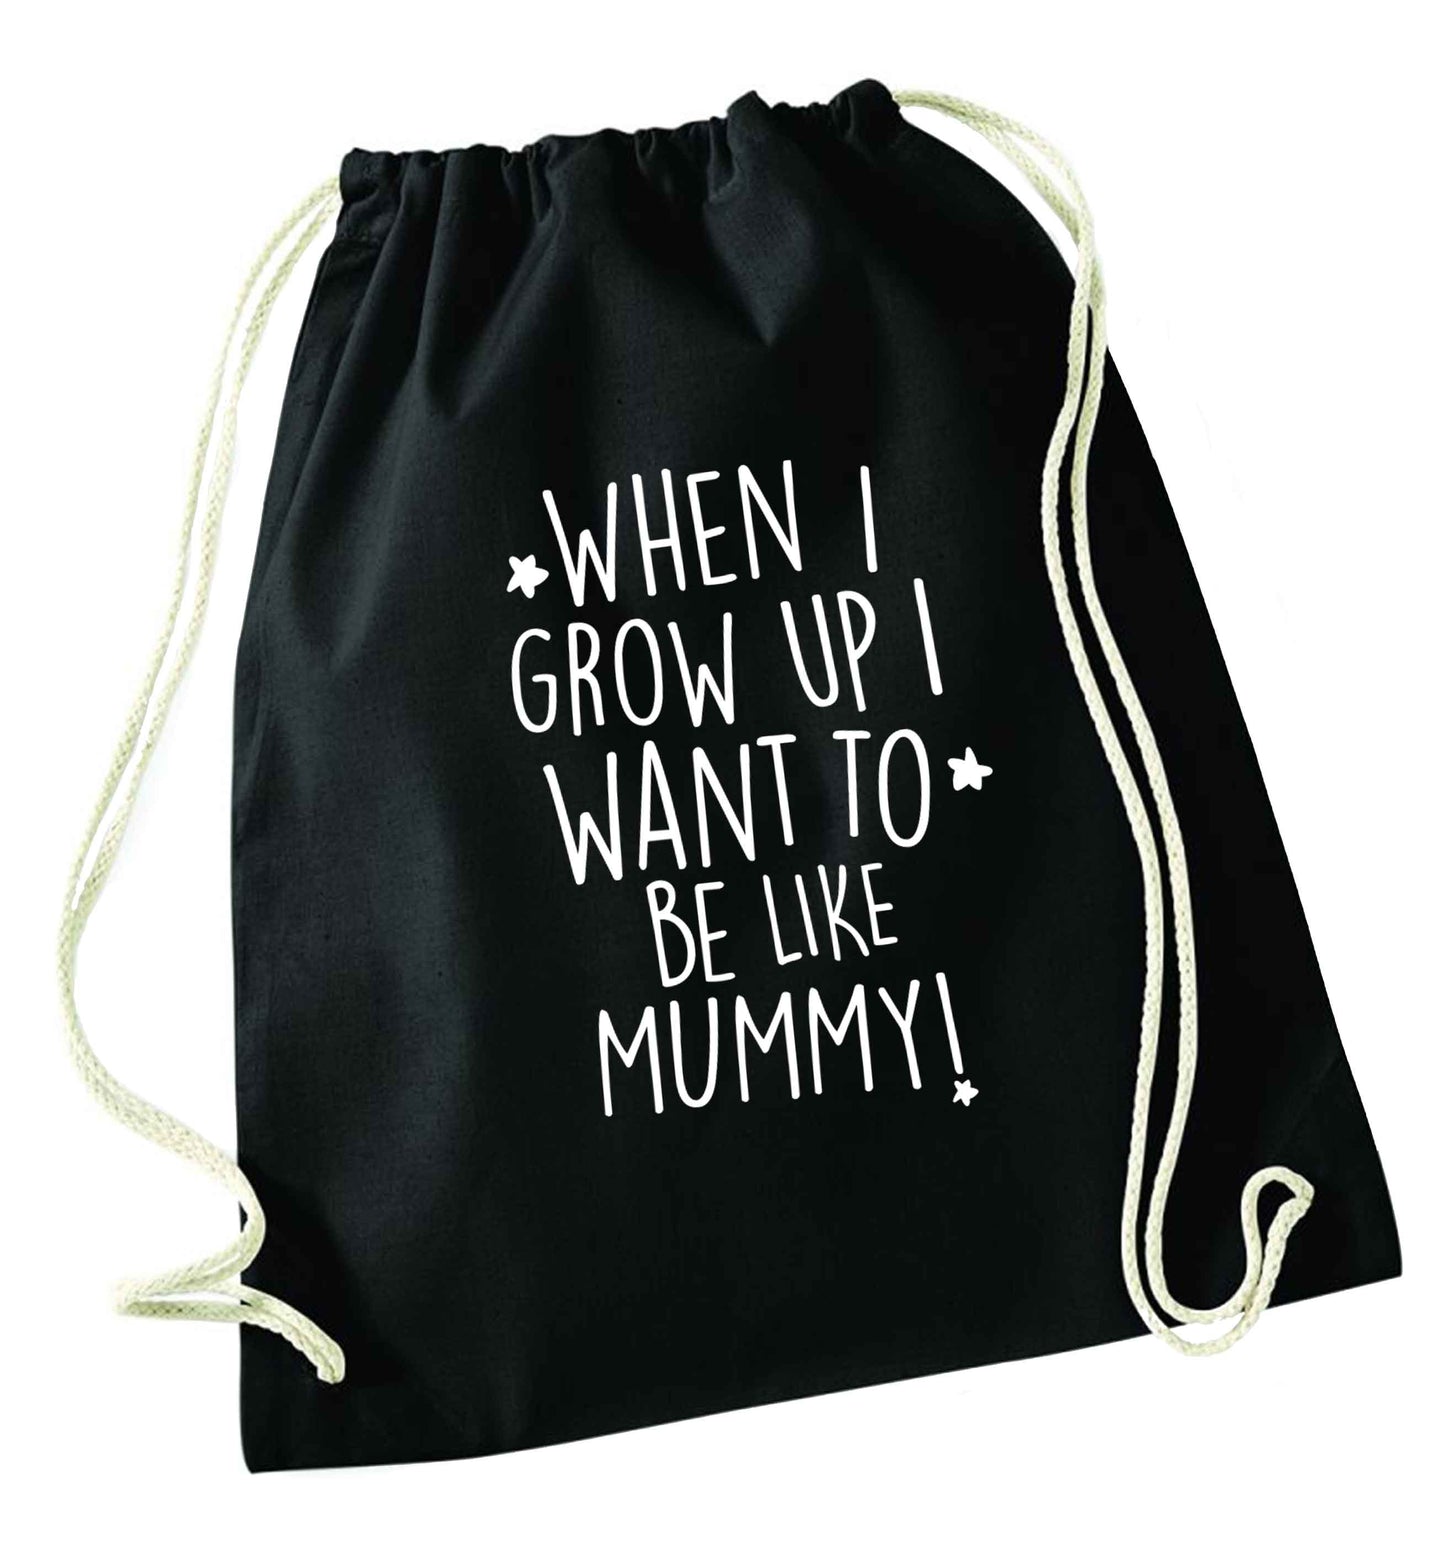 When I grow up I want to be like my mummy black drawstring bag